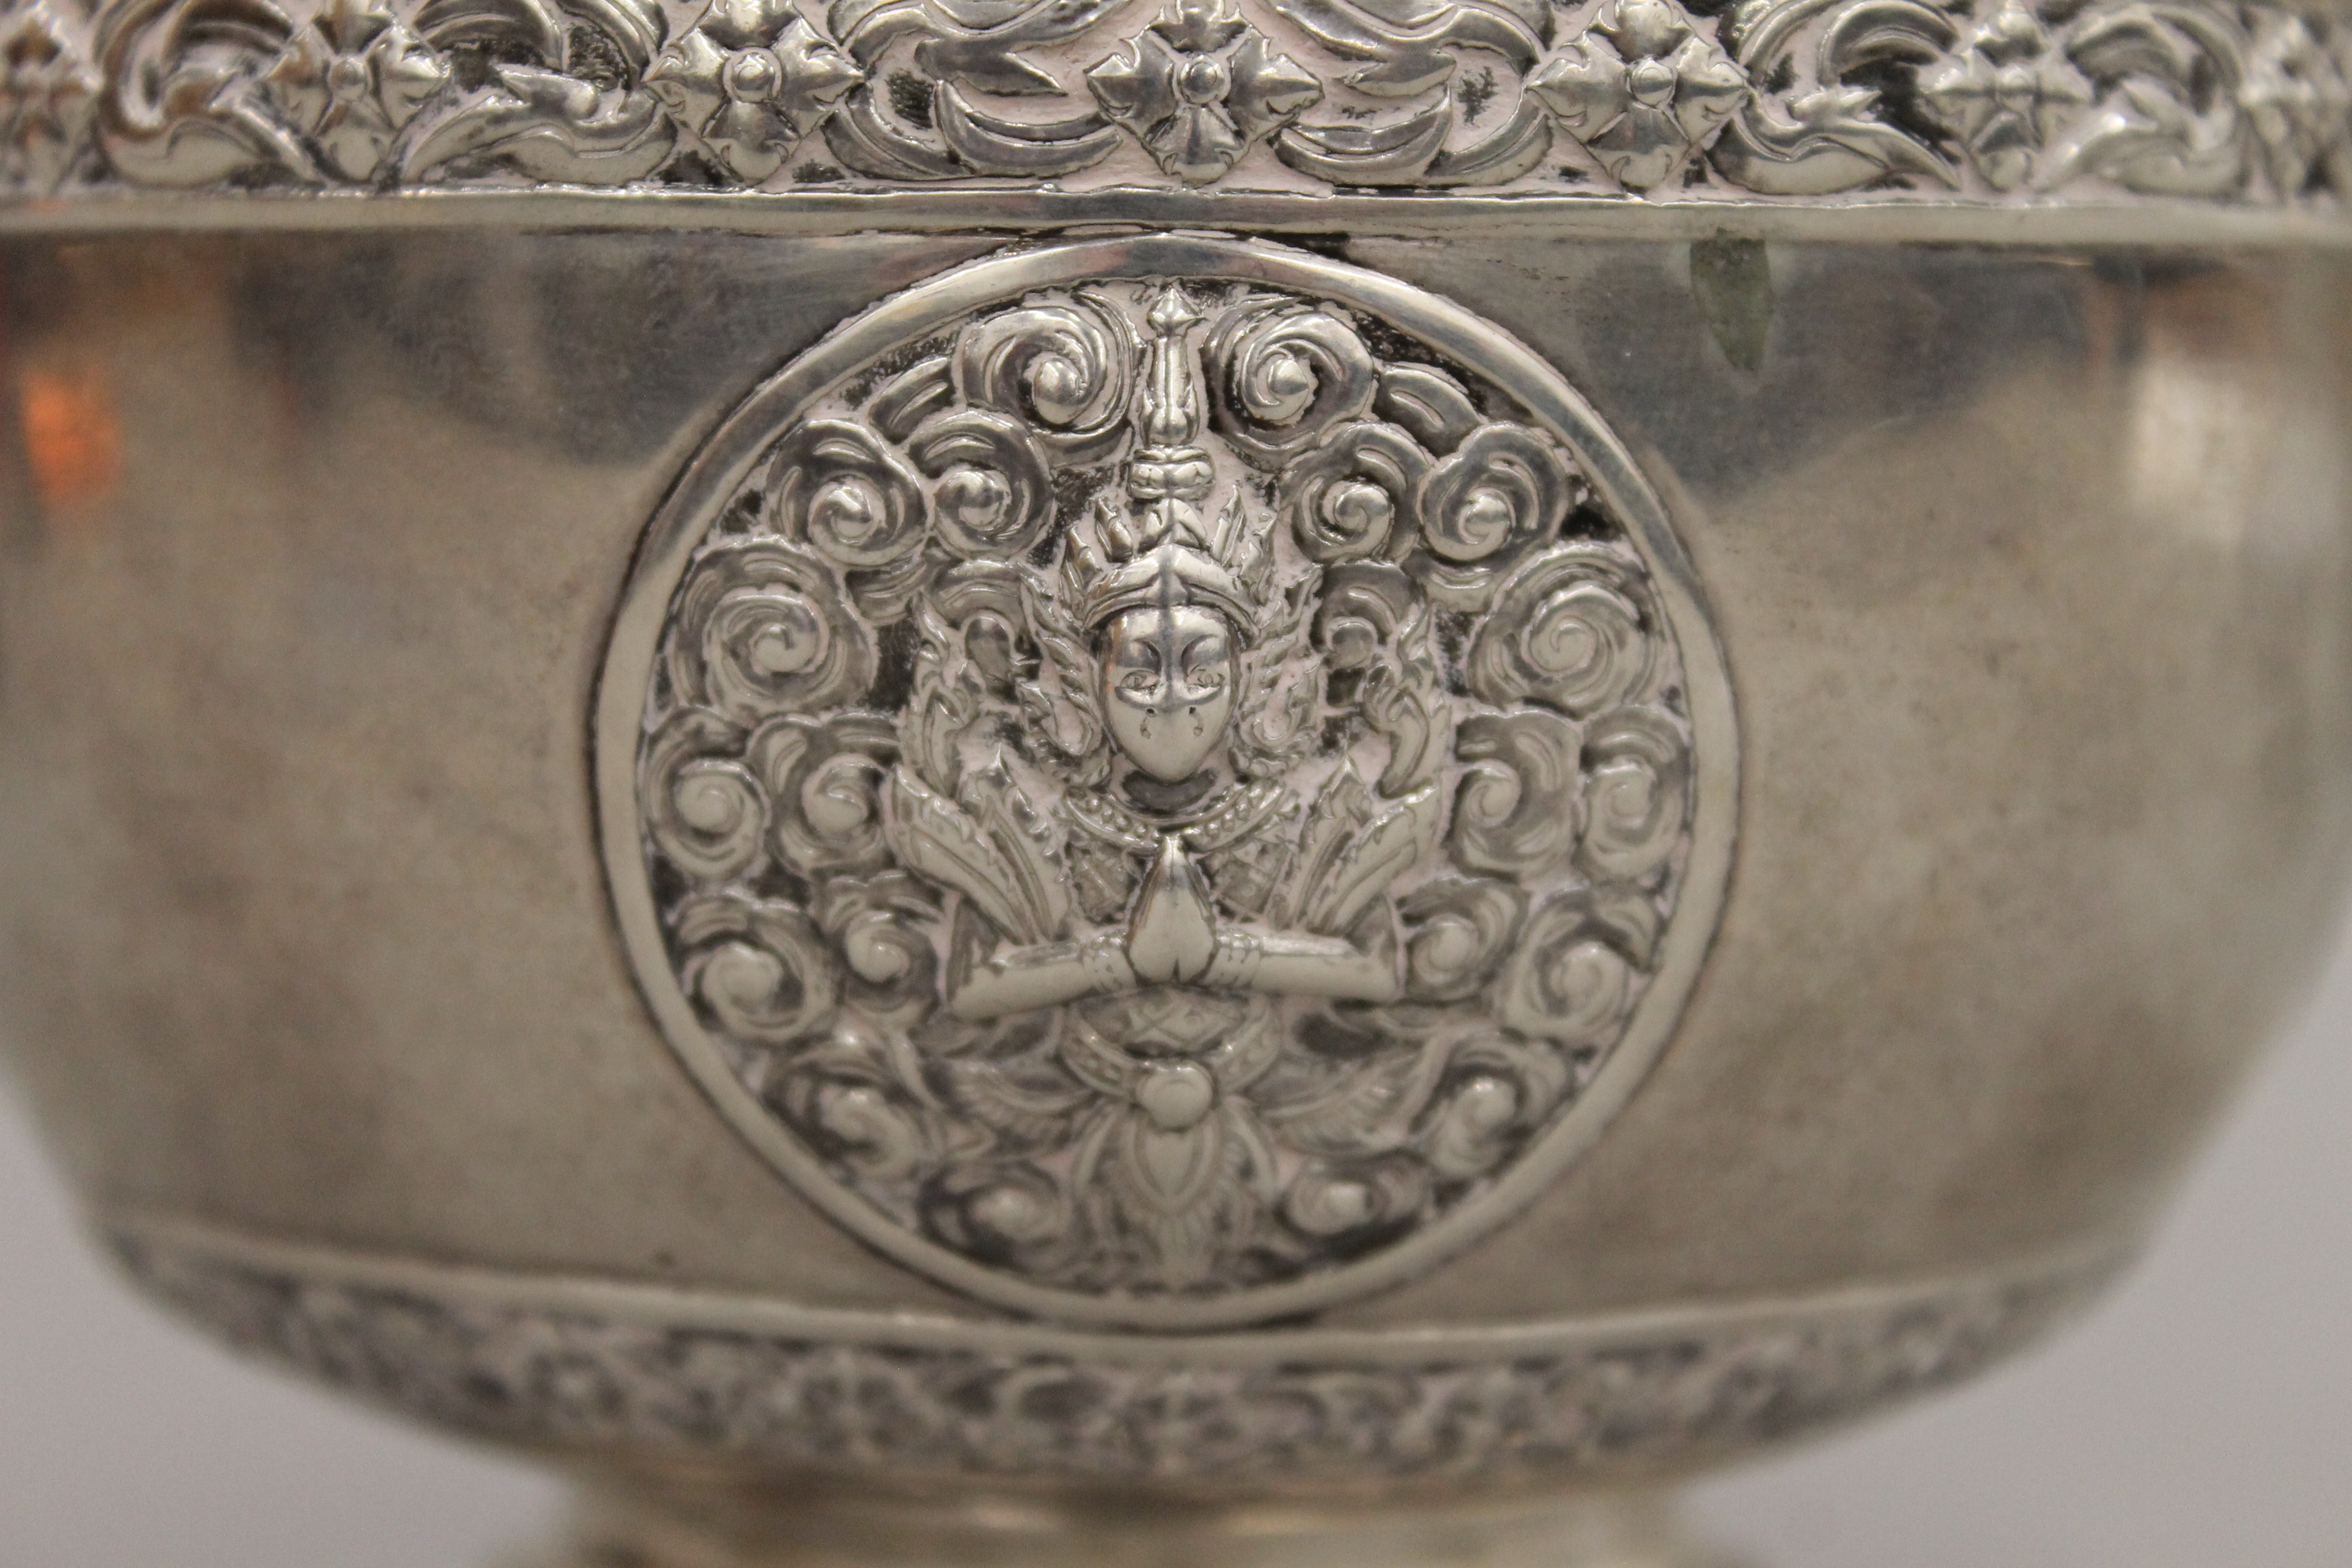 A Thai silver bowl engraved R.T.D.S., Amateur Race 10-7-1926, G T Simzon's, Golden Palm Runner Up. - Image 4 of 8